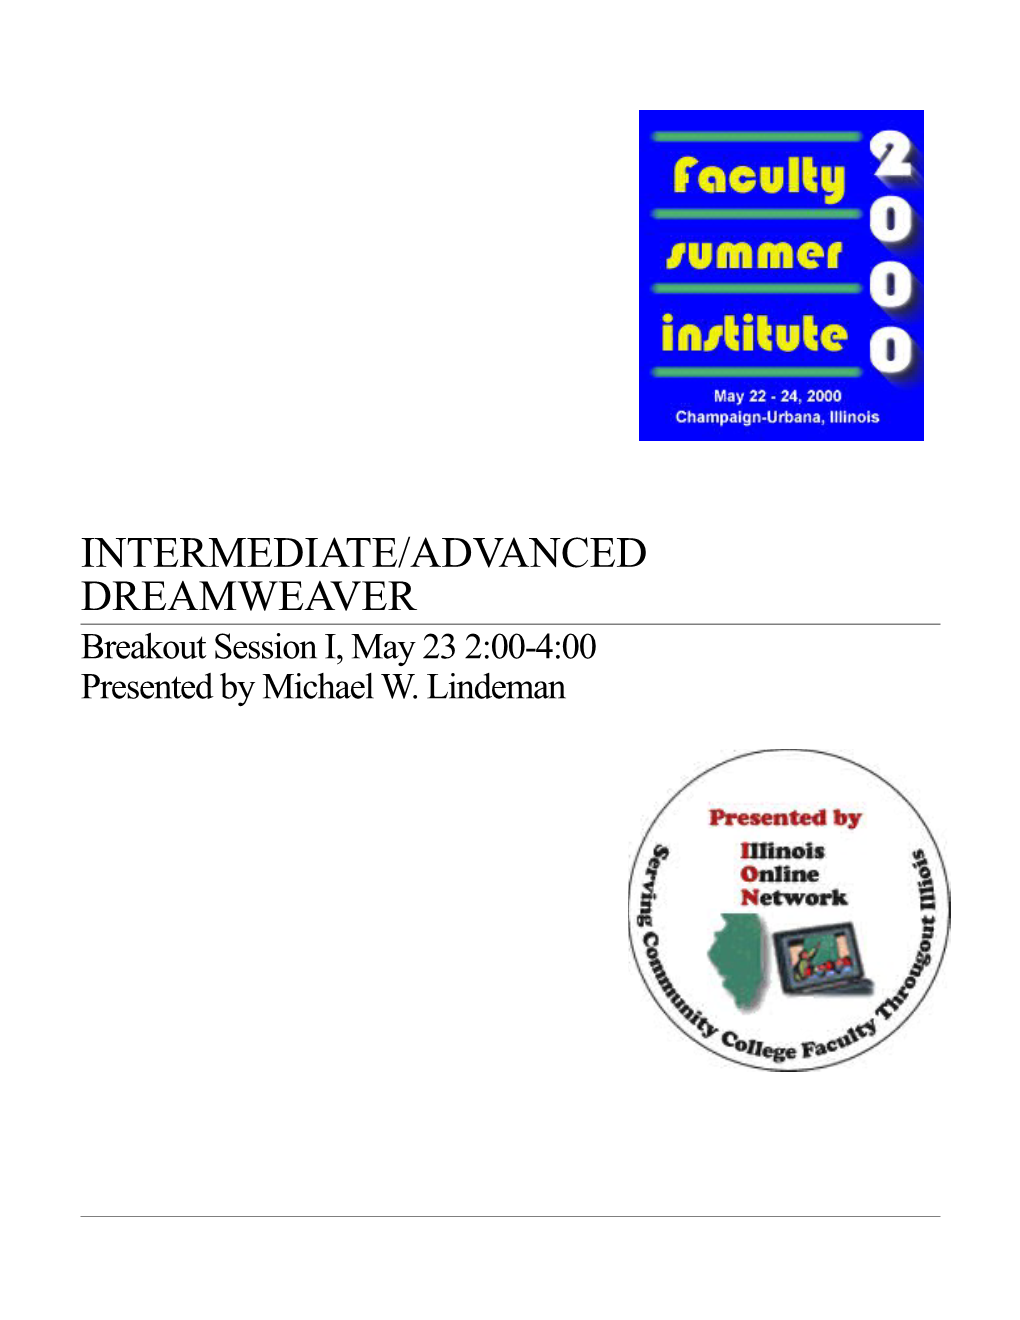 Intermediate/Advanced Dreamweaver